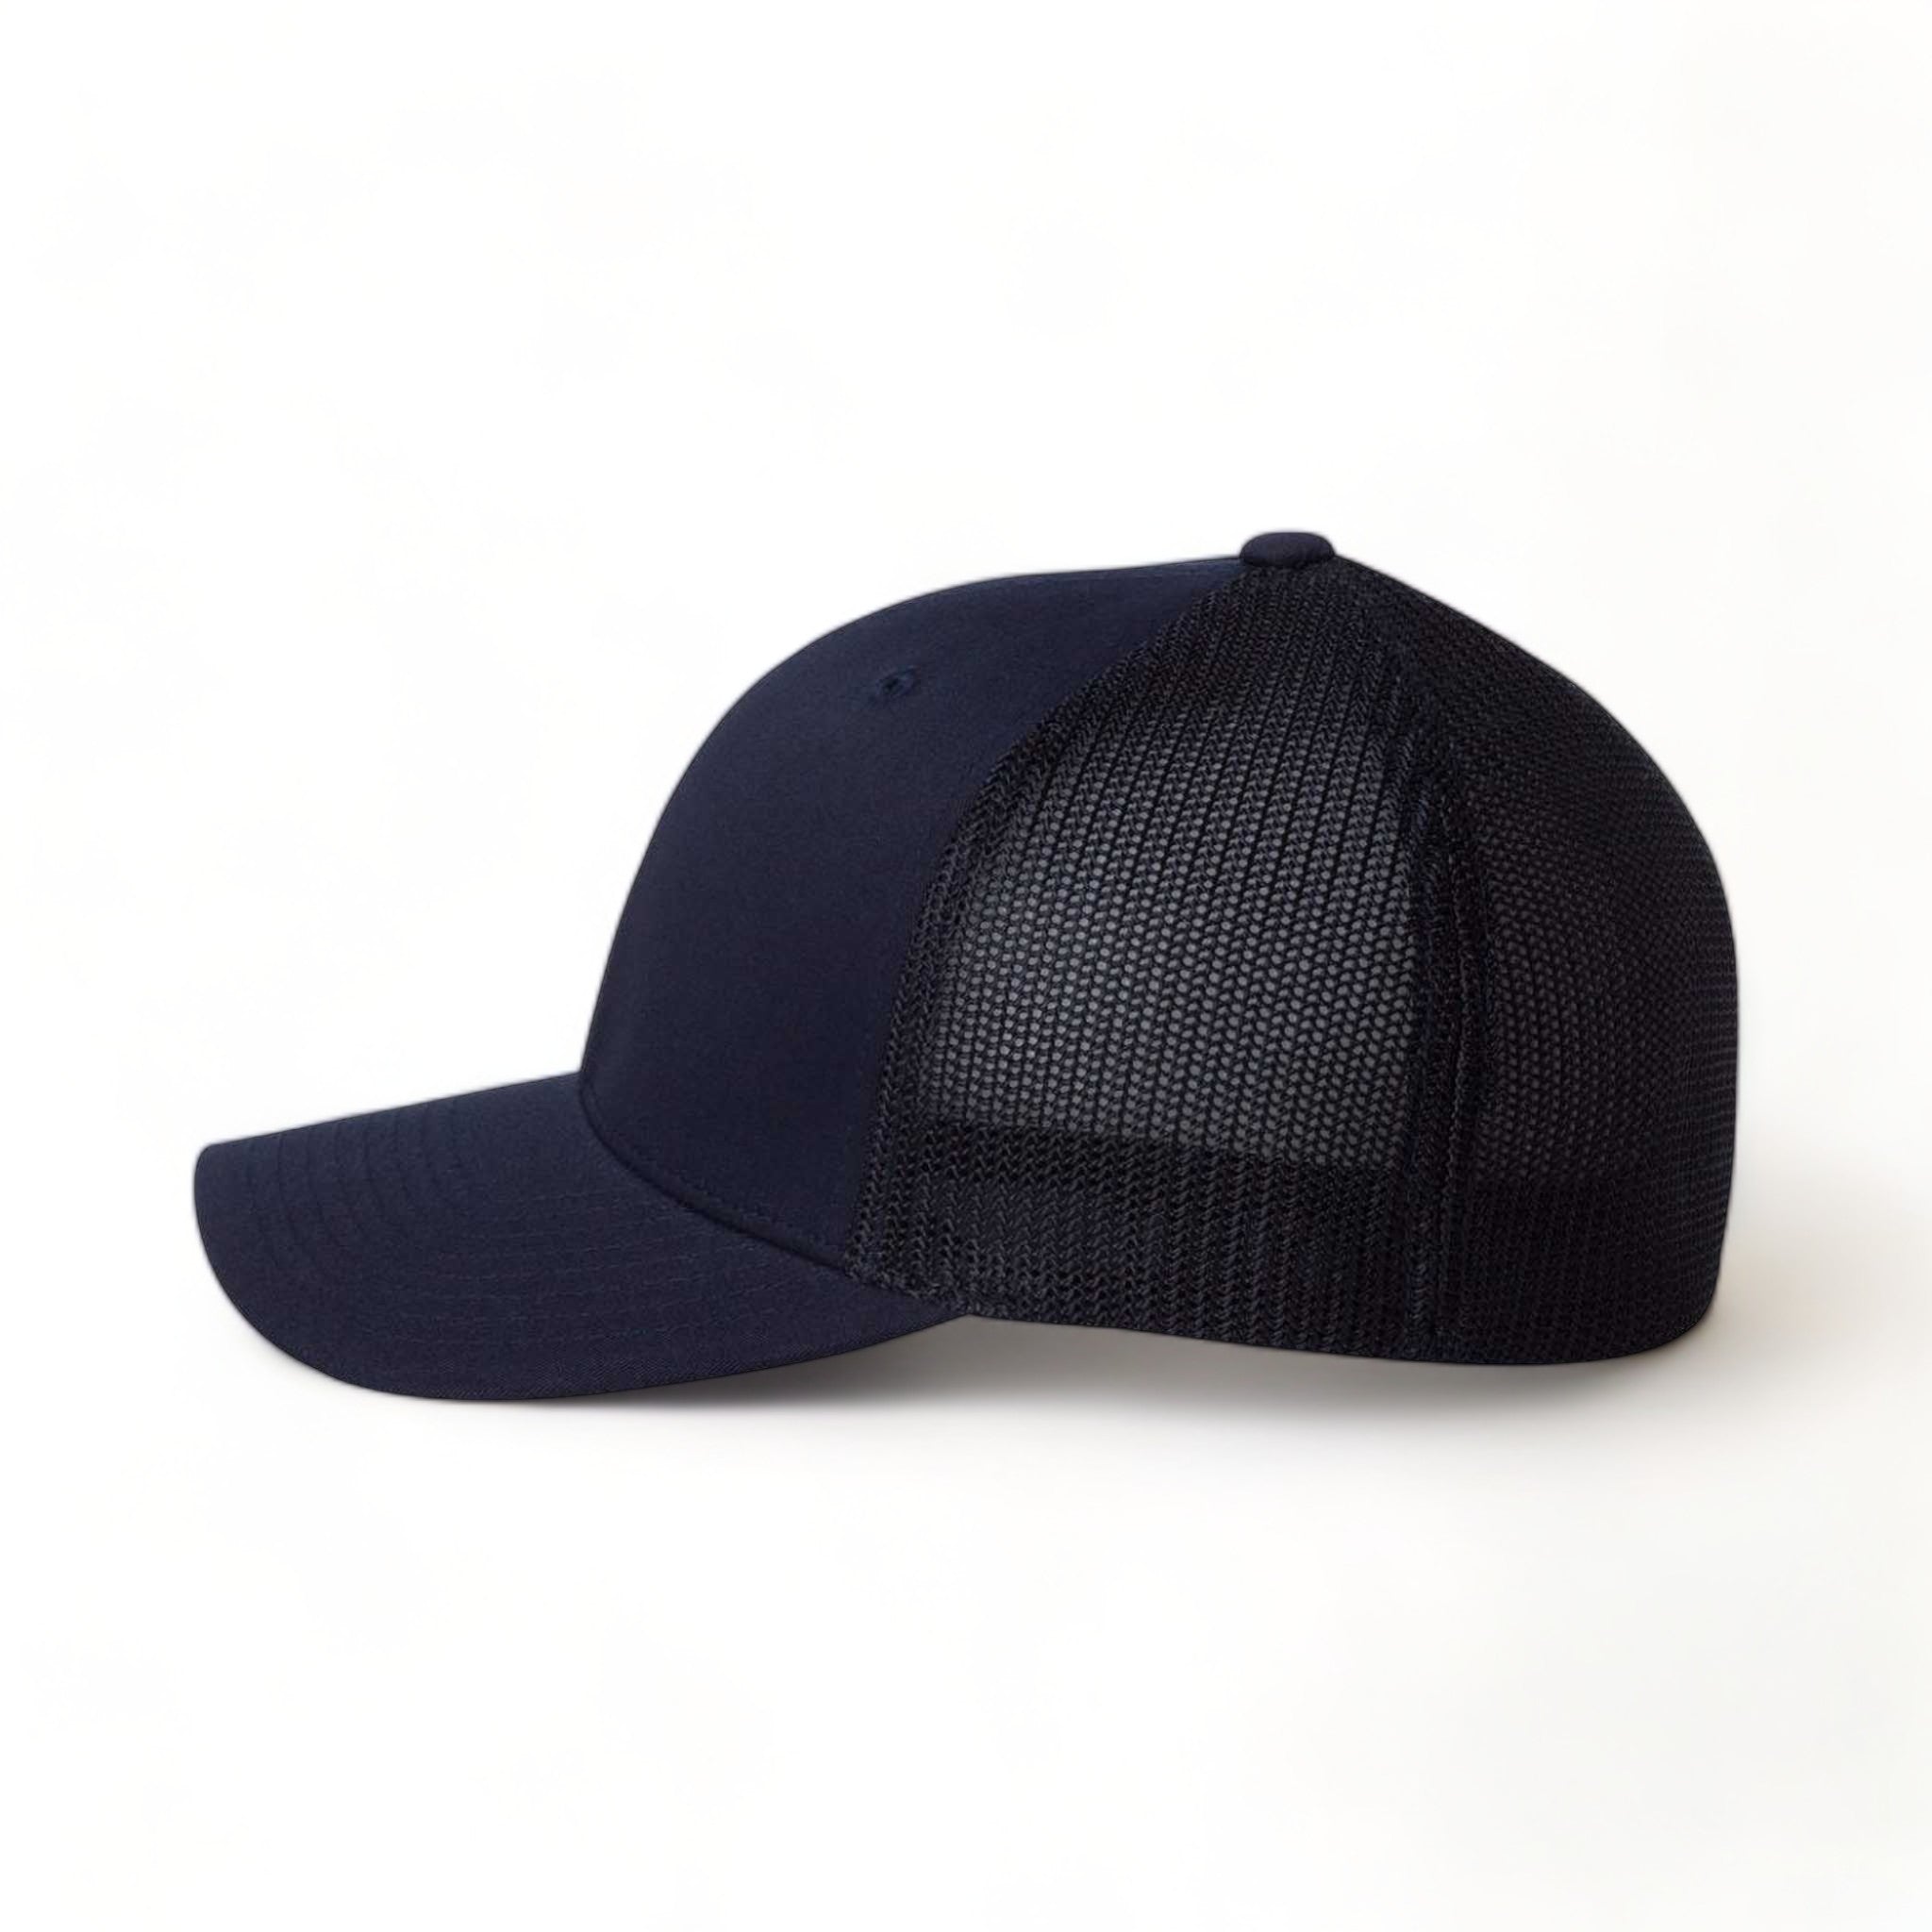 Side view of Flexfit 6511 custom hat in dark navy